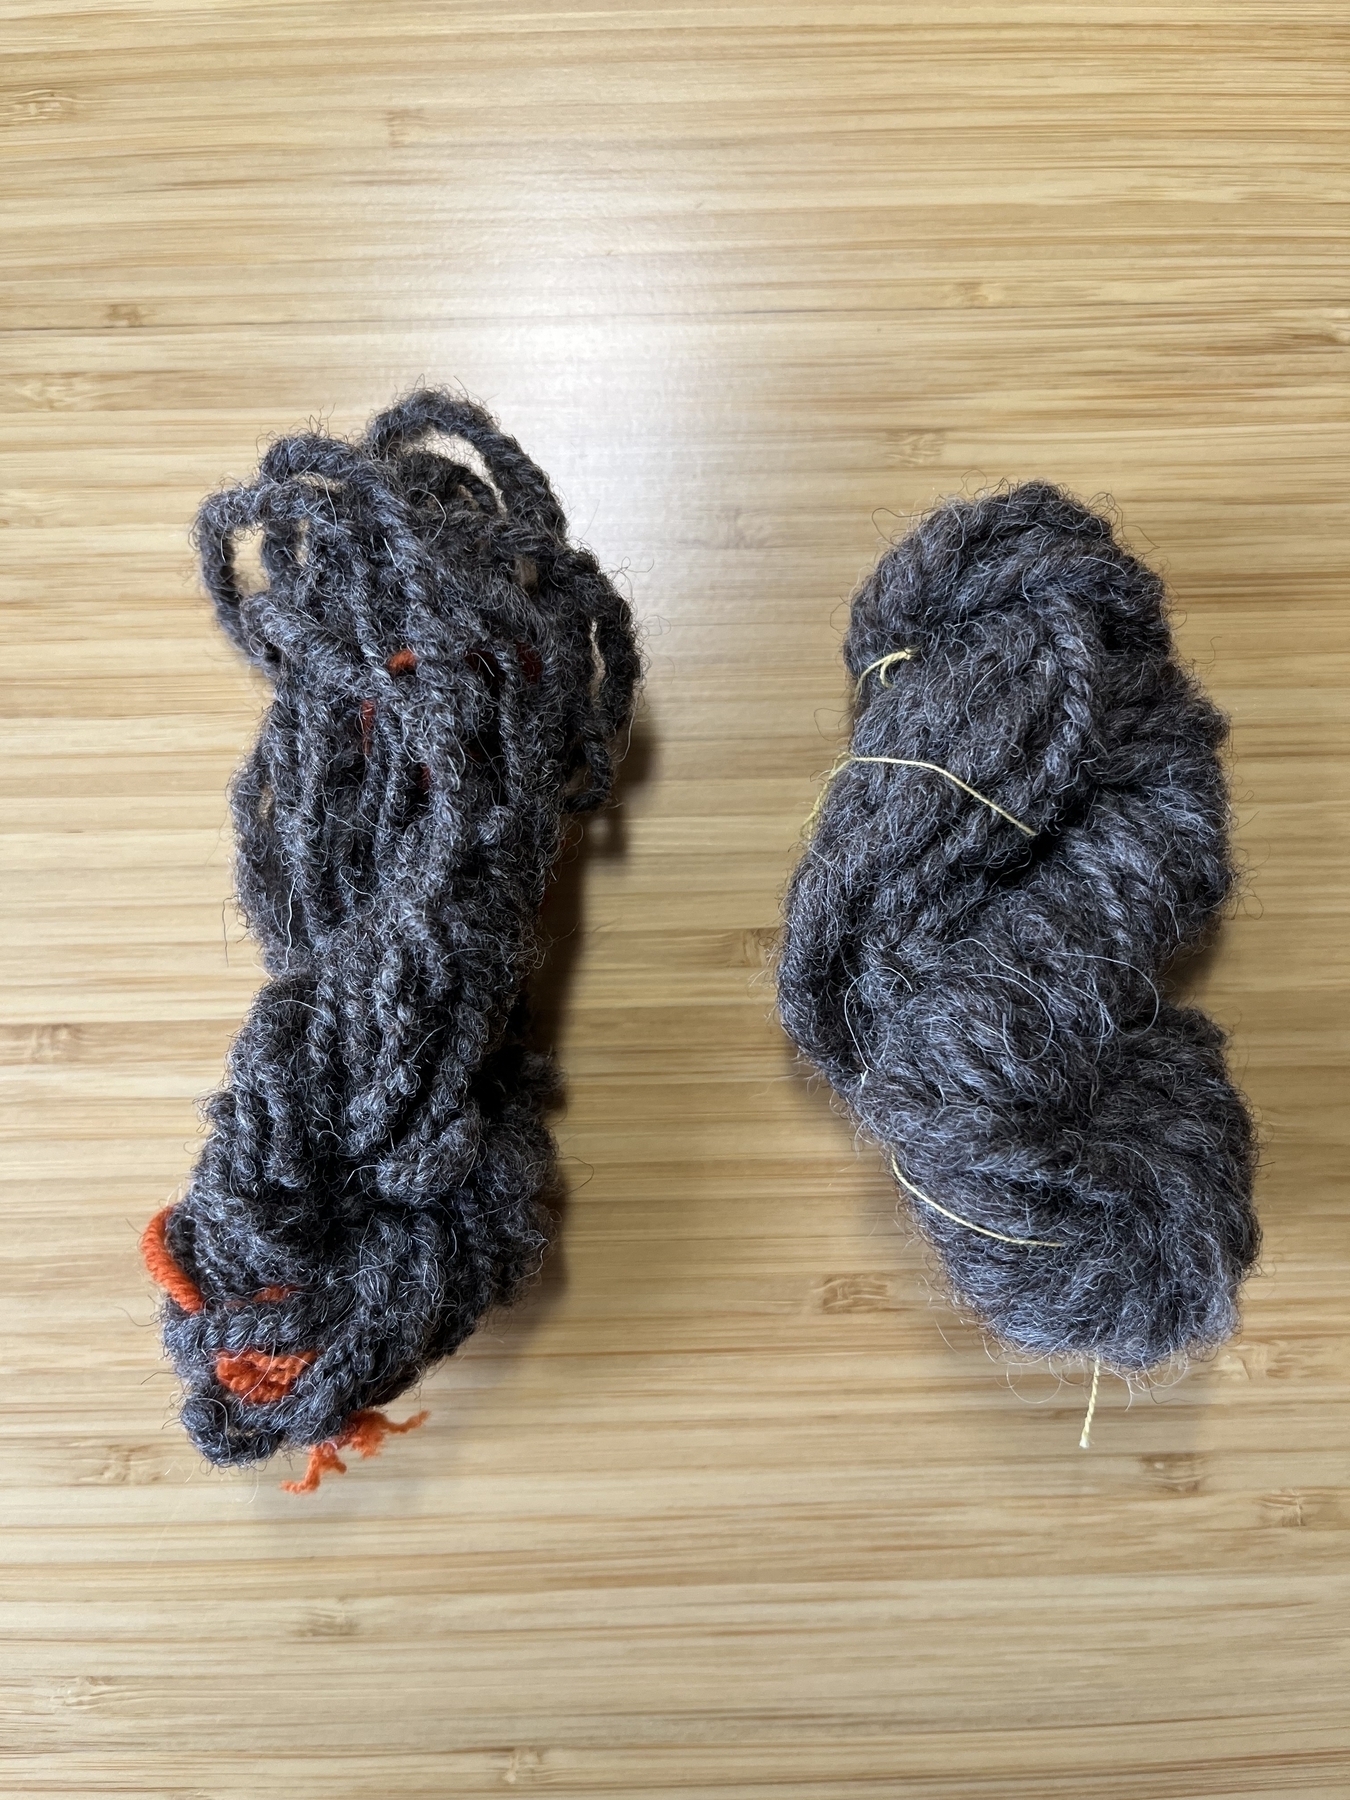 Two skeins of grey hand-spun yarn